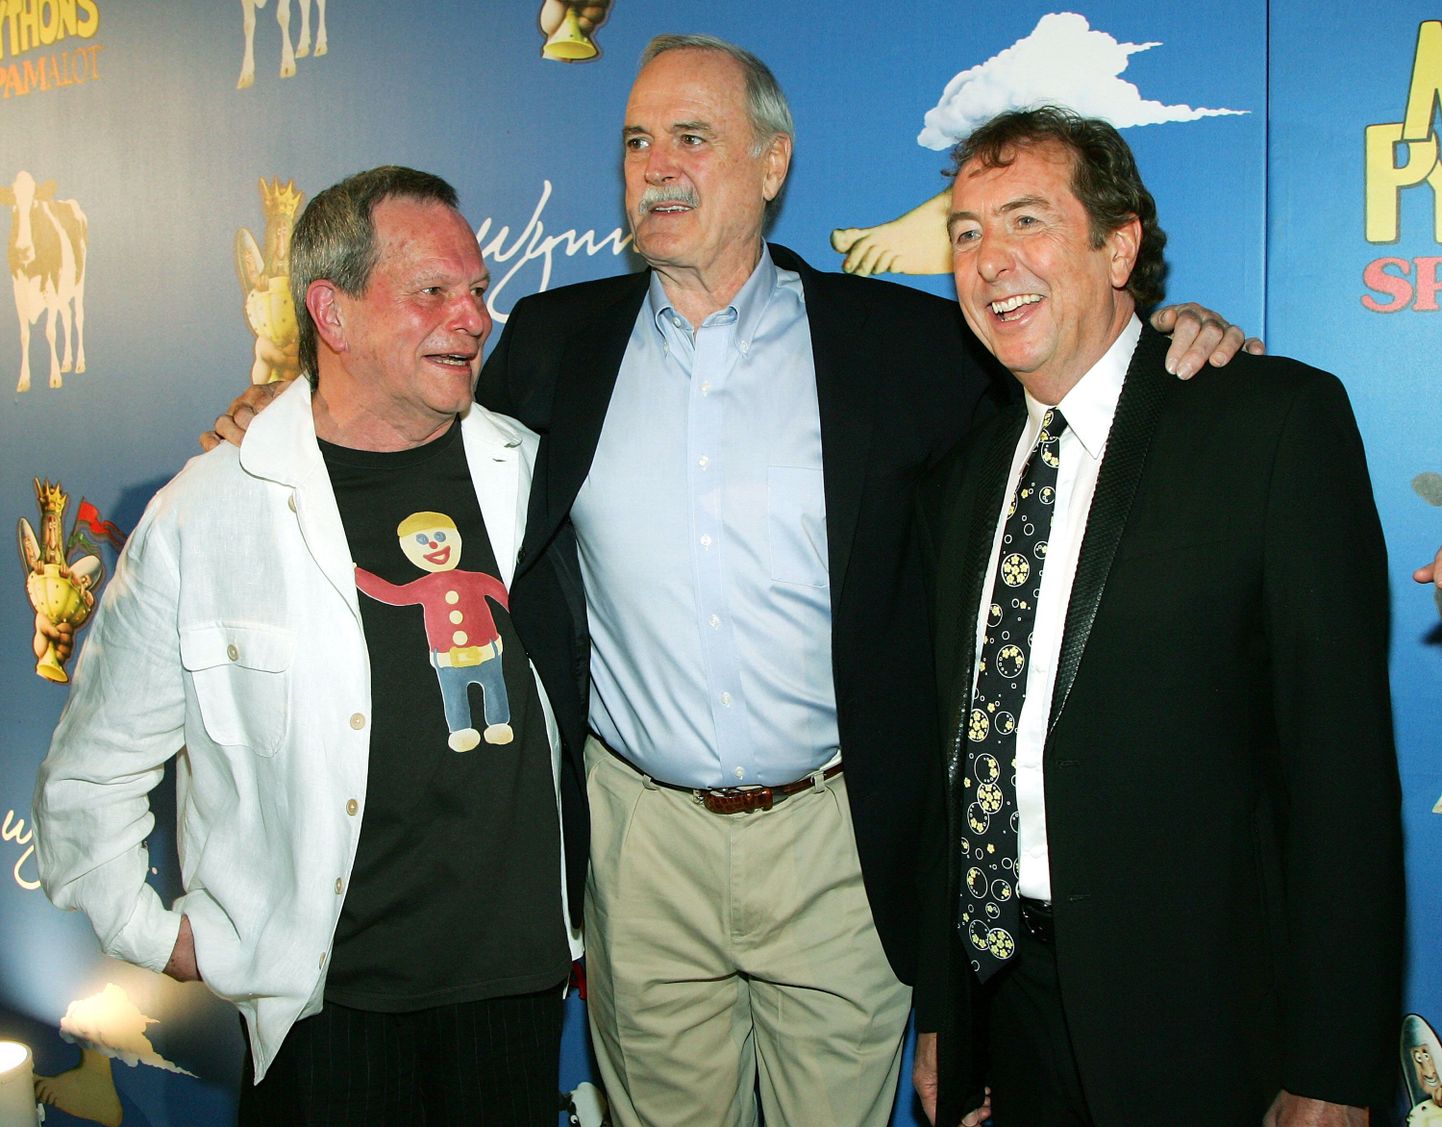 Monty Pythoni koomikutetiimi liikmed Eric Idle, Terry Gilliam ja John Cleese.